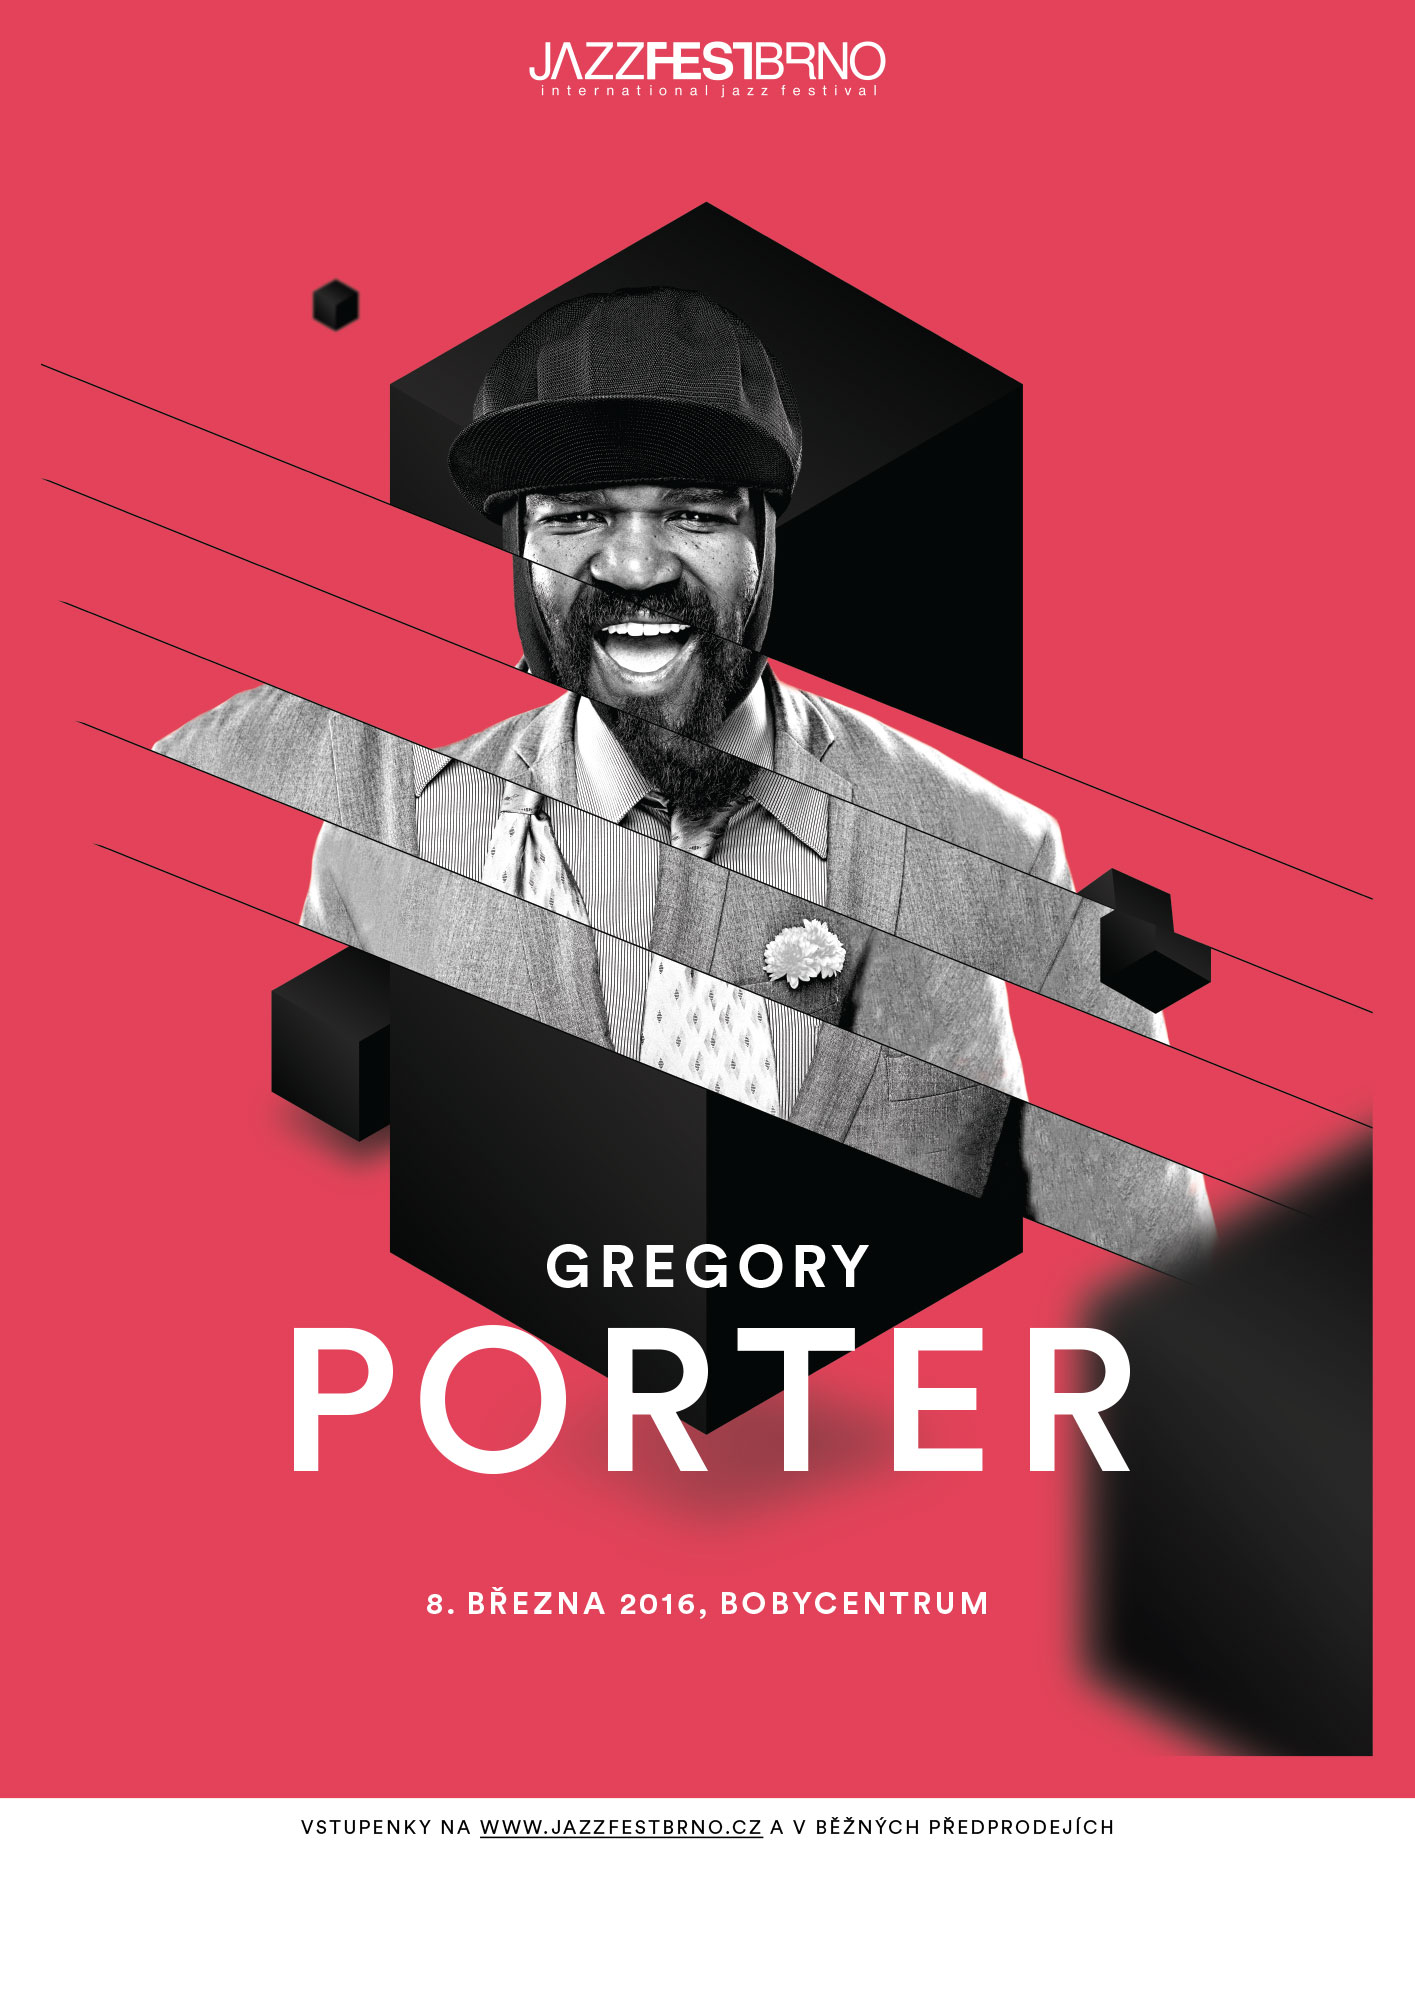 Jazzfestbrno 2016 - Gregory Porter